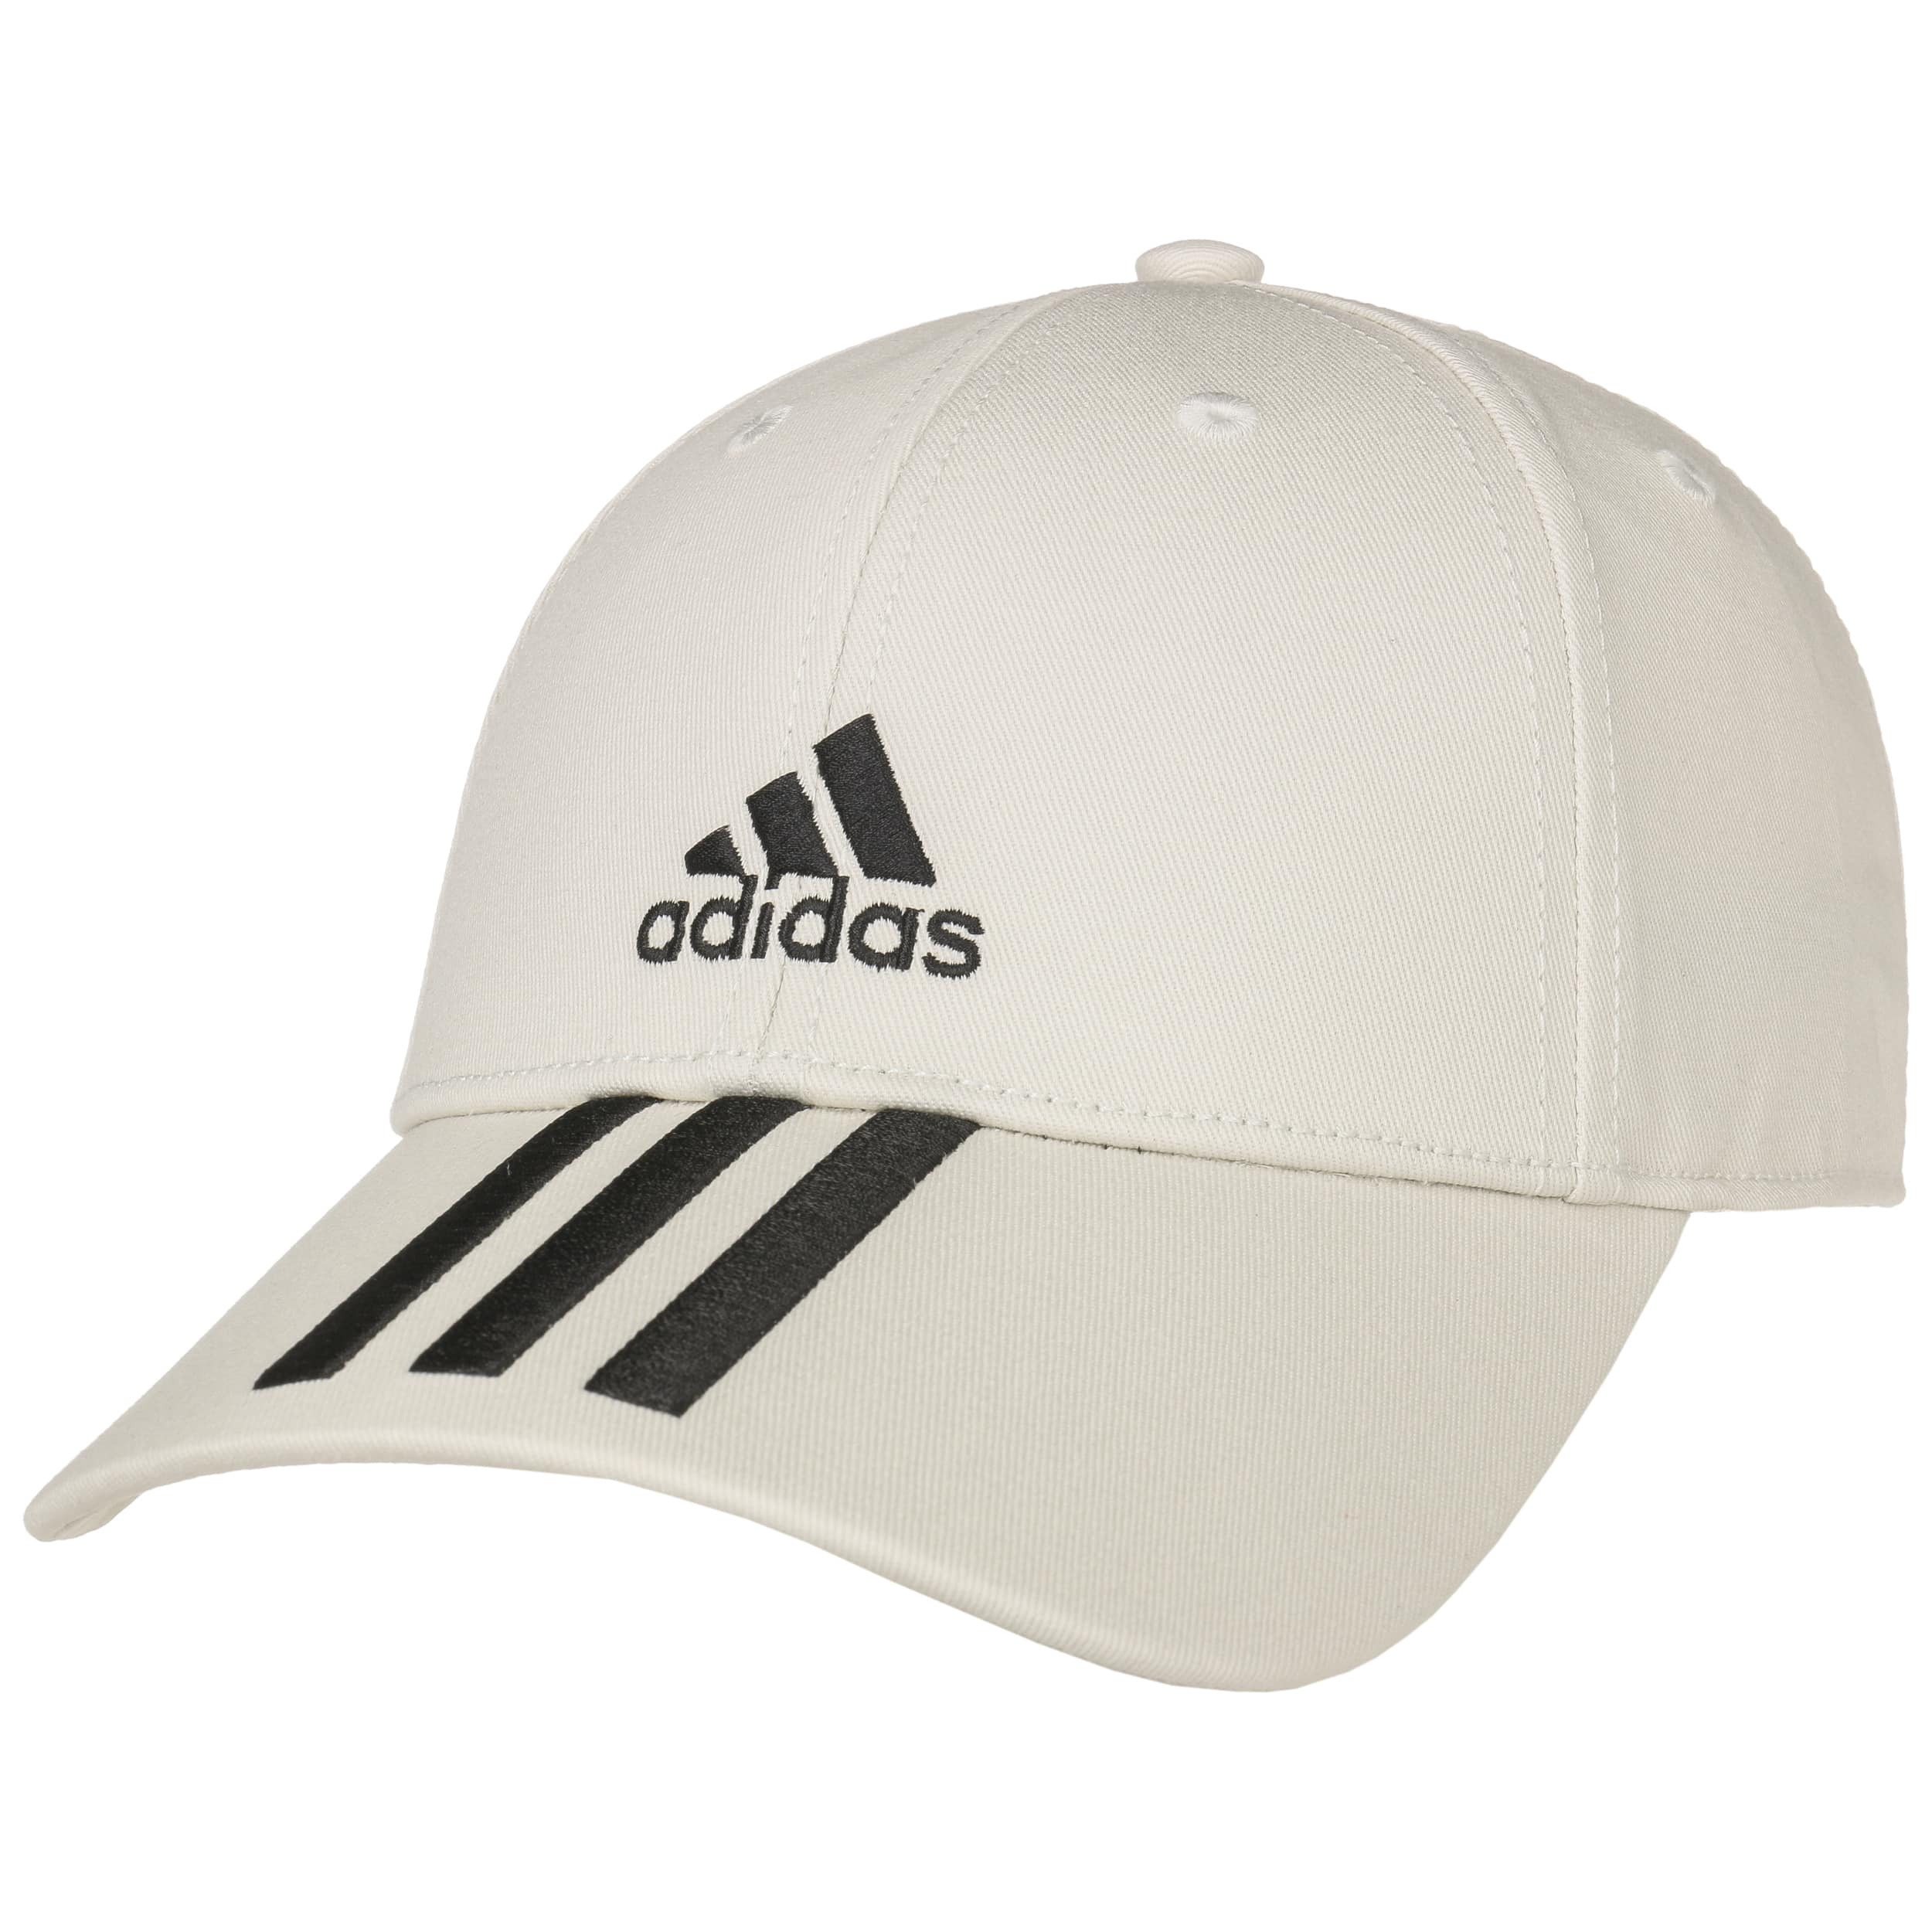 adidas 3 stripes performance hat